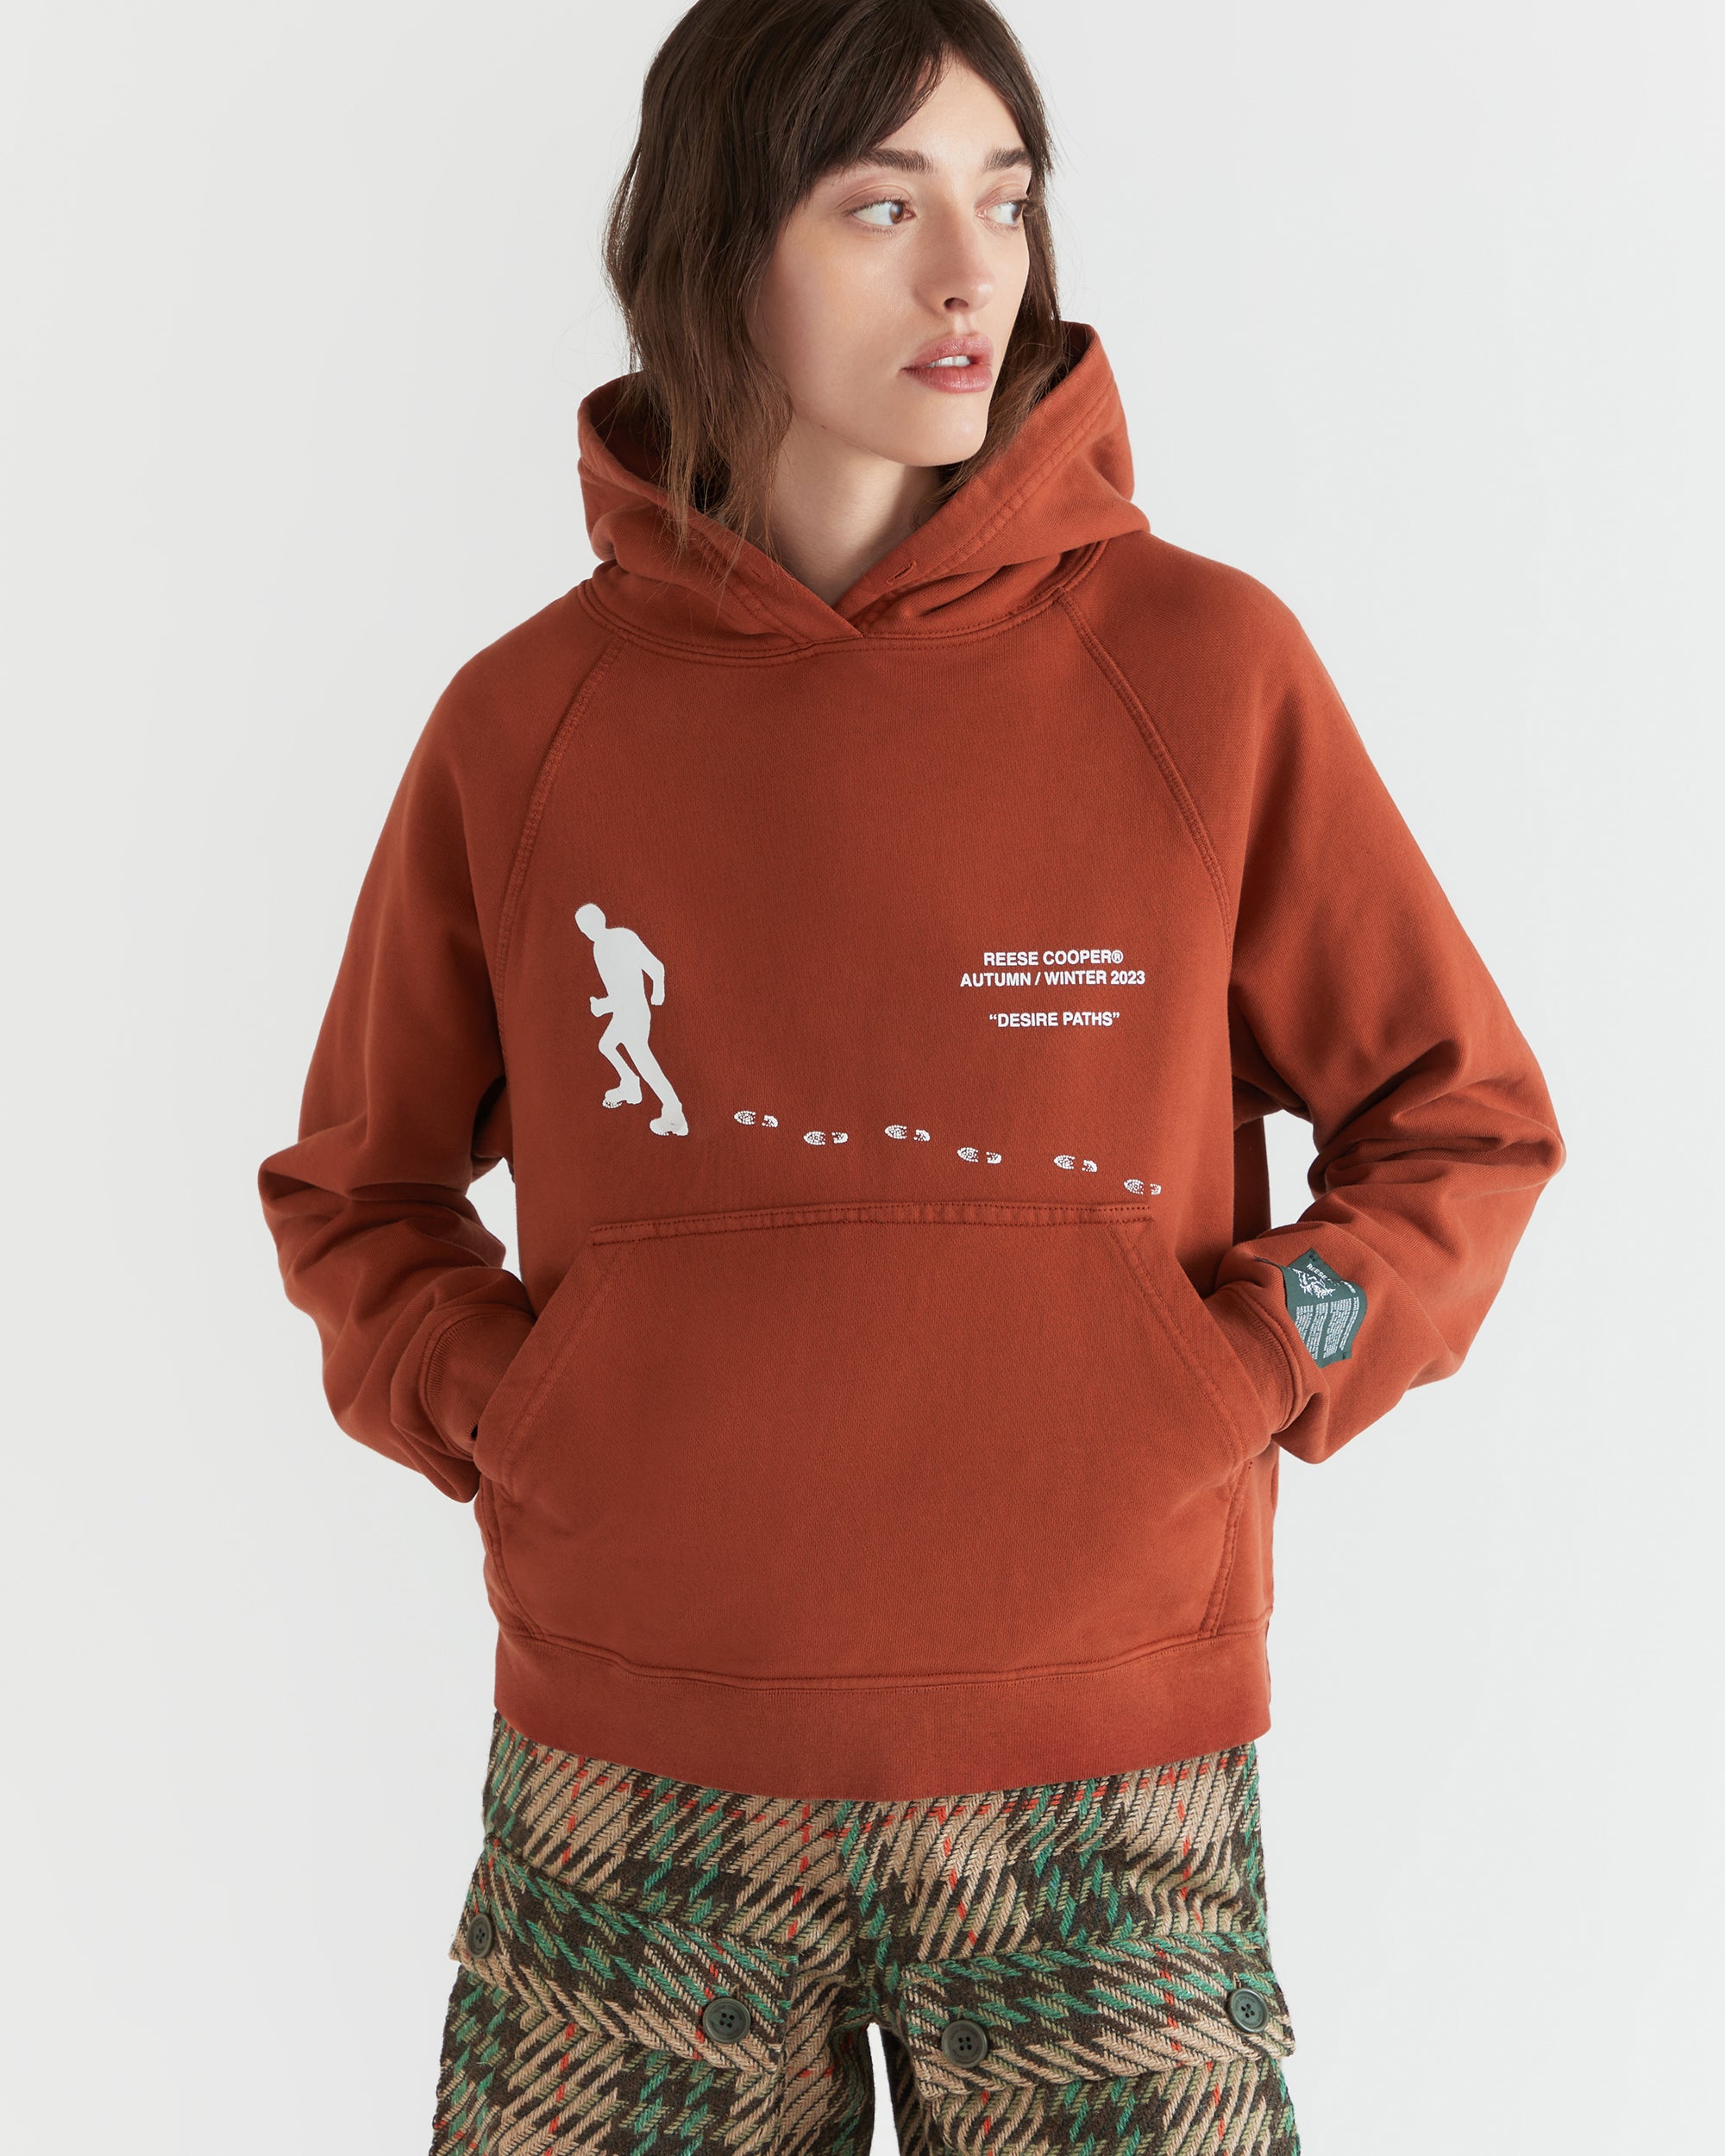 Women - Desire Paths Hooded Sweatshirt - Burnt Orange - 3